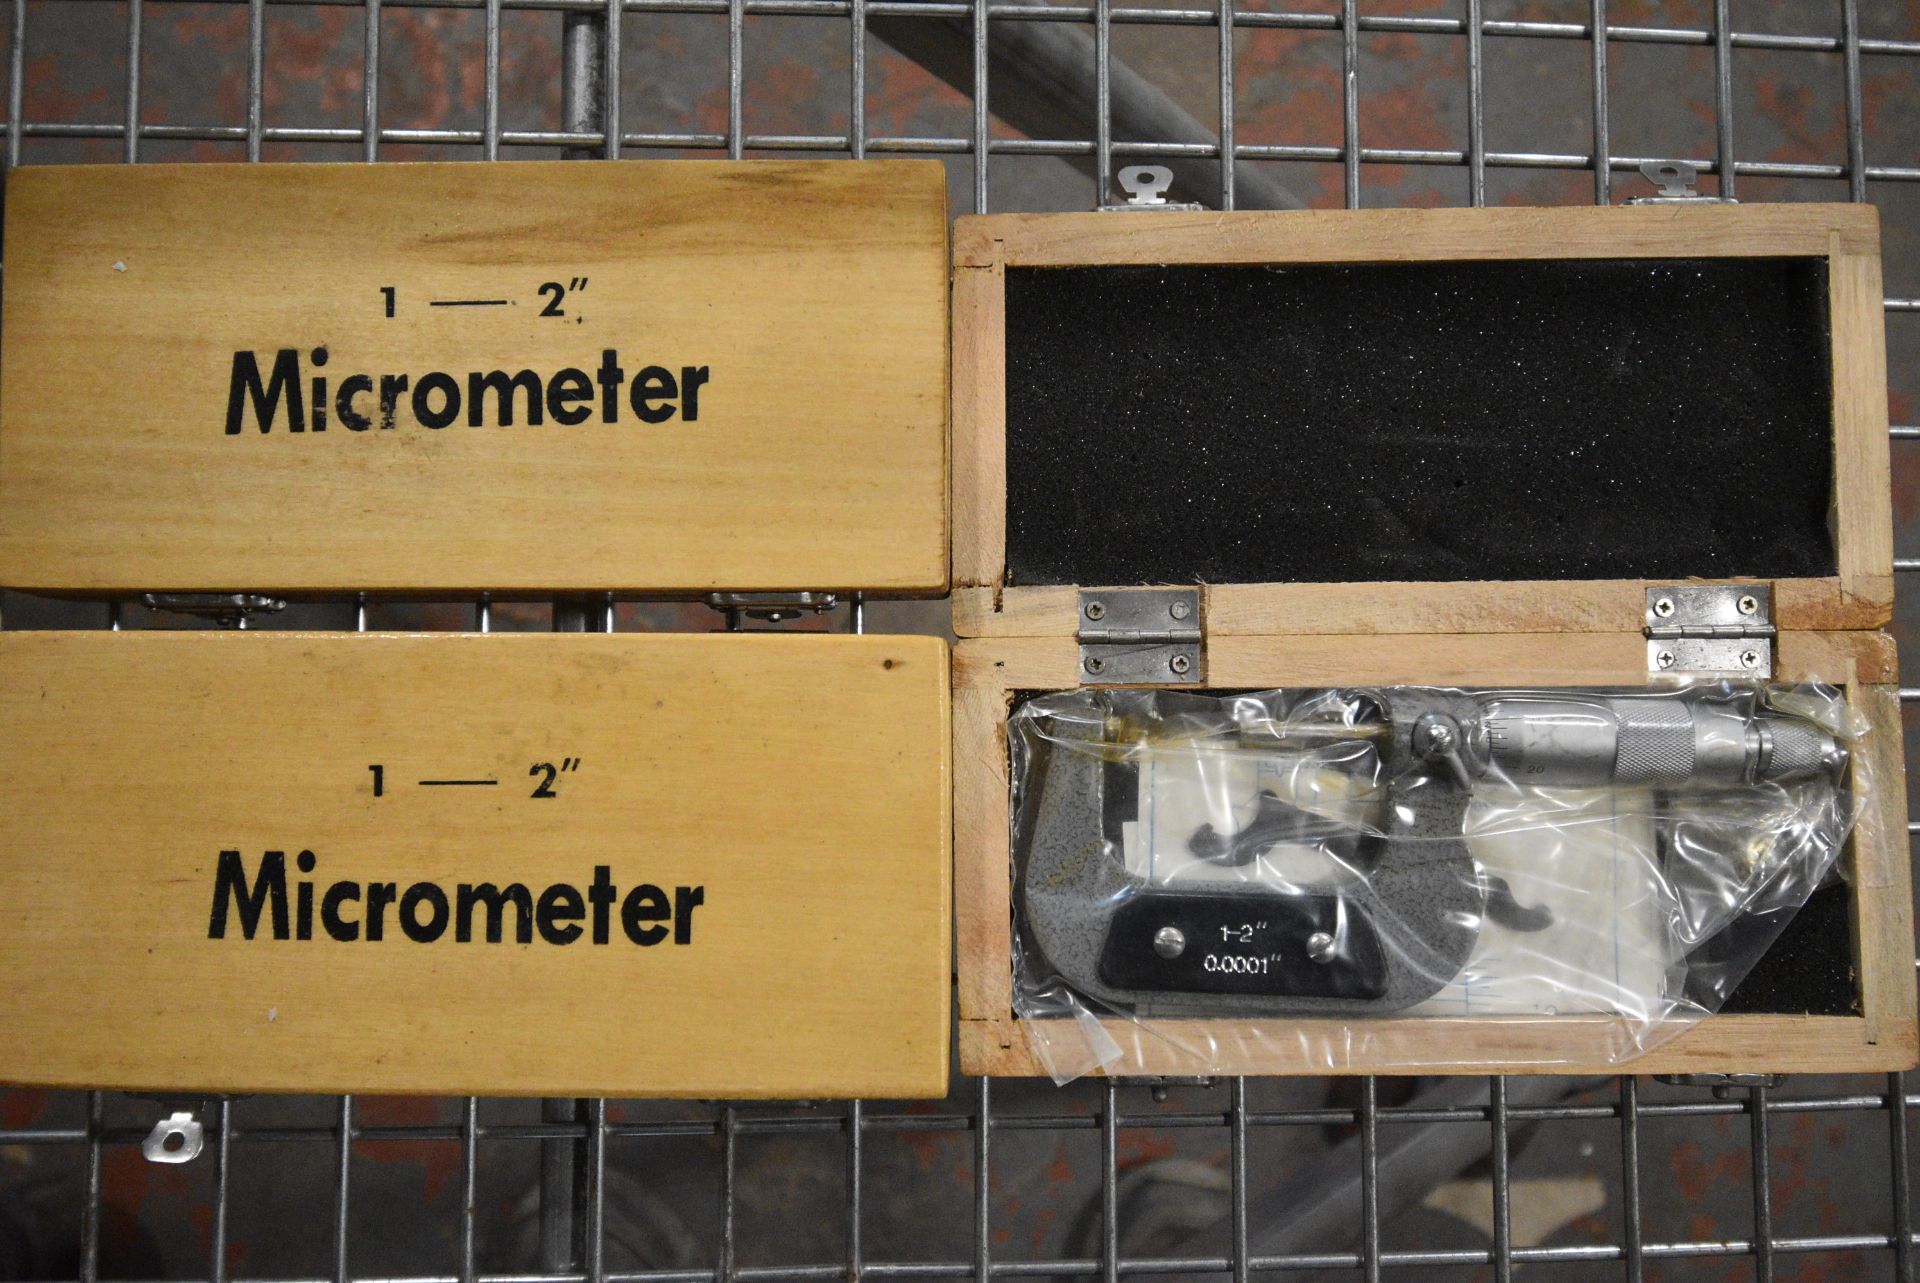 Three 1-2" Micrometers